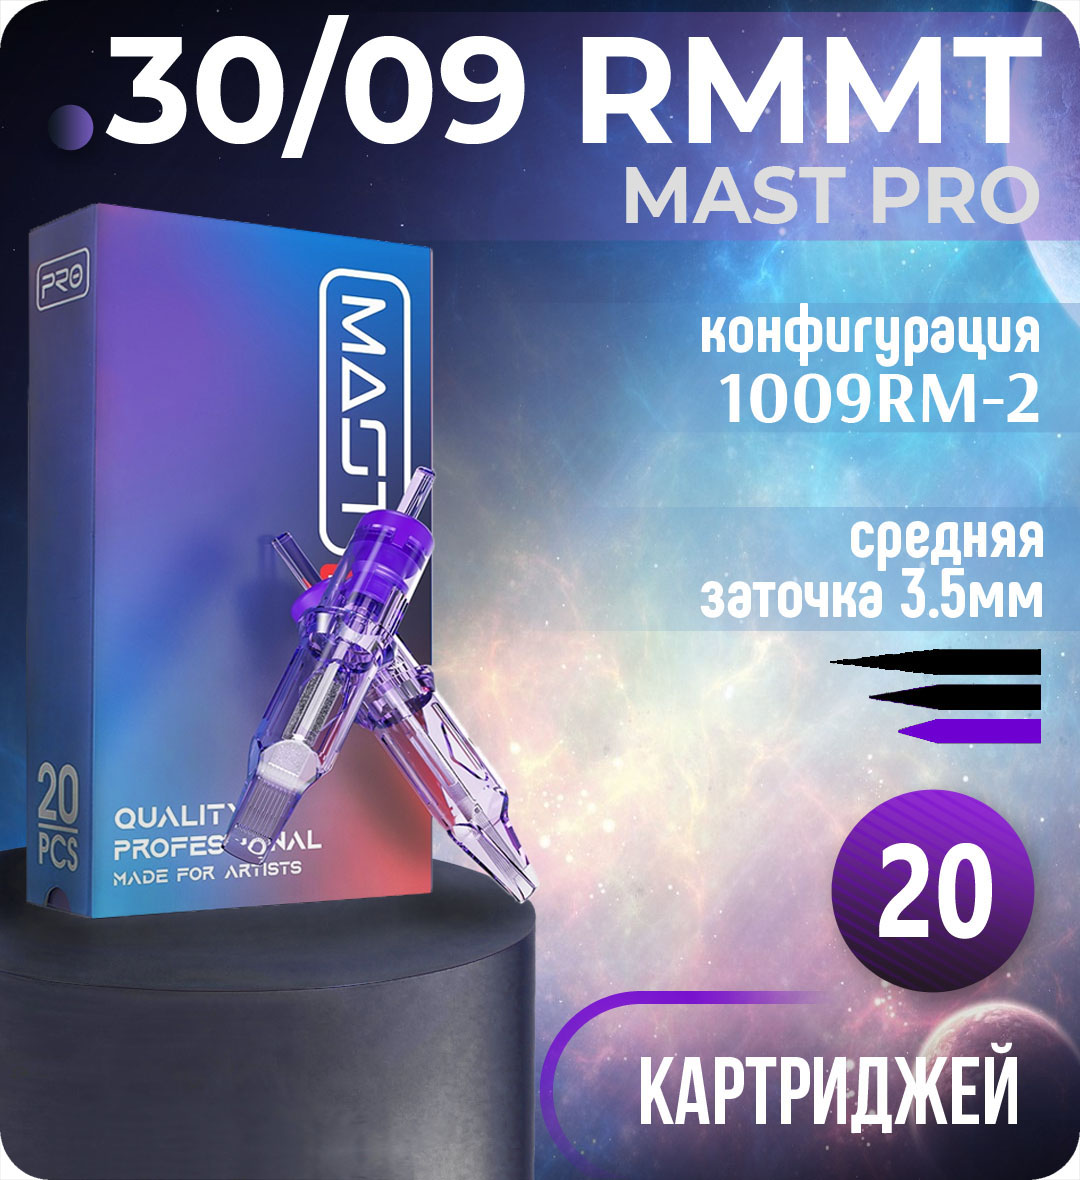 Картриджи Mast Pro 30/09 RMMT (1009RM-2) для тату, перманентного макияжа и татуажа Dragonhawk 20шт